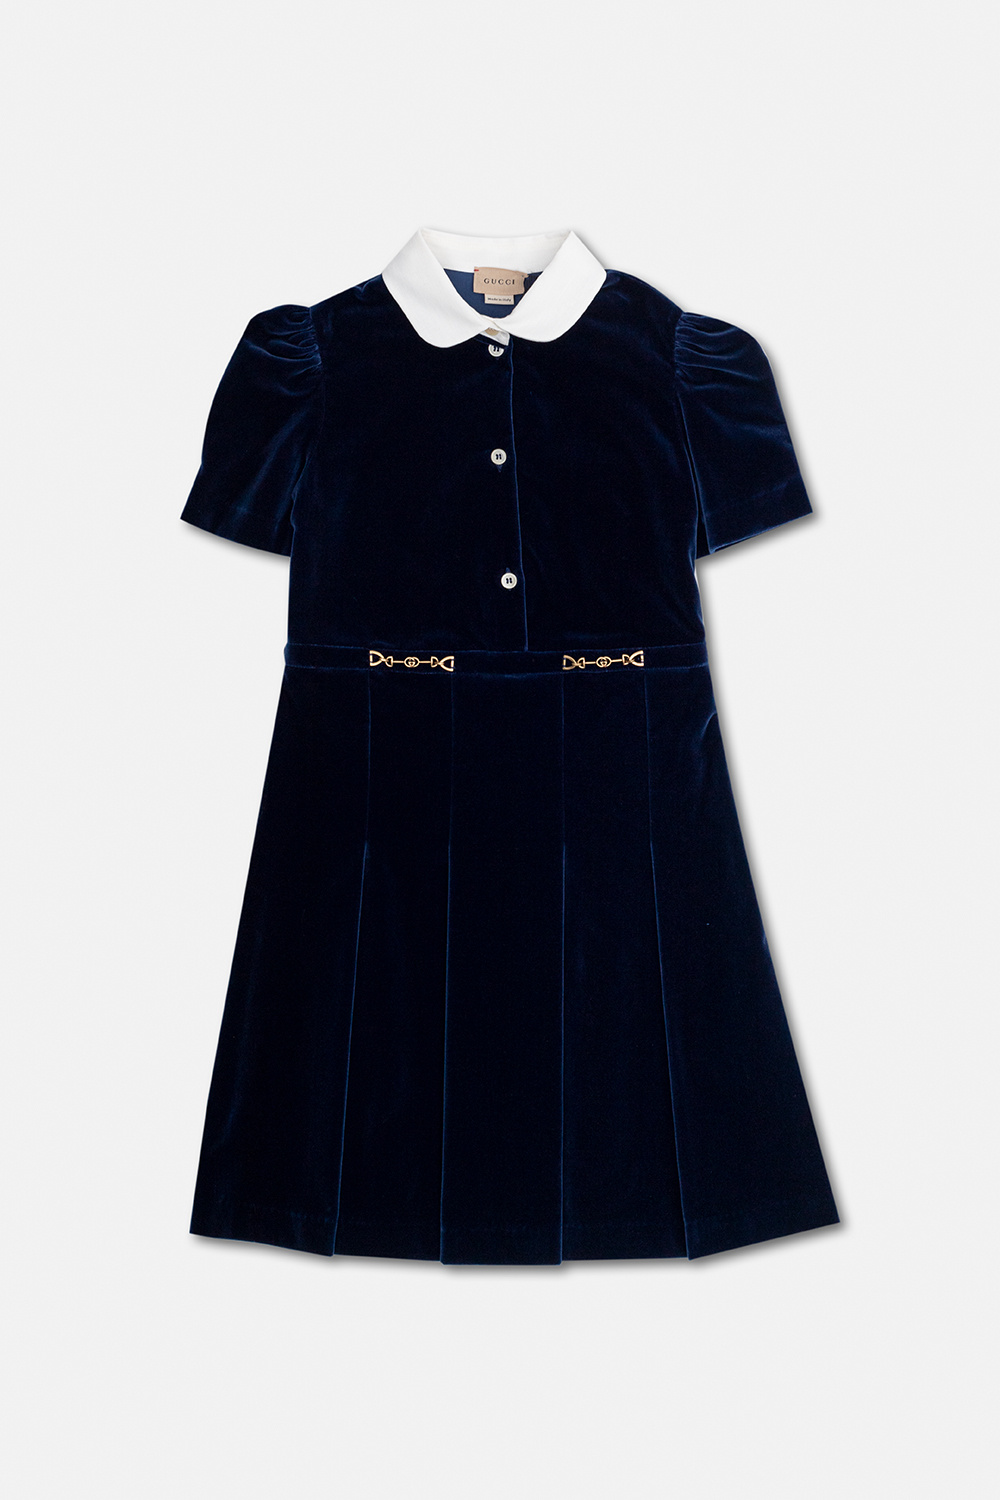 Gucci Kids Girls Pocket Dress in Navy 4 yrs Blue